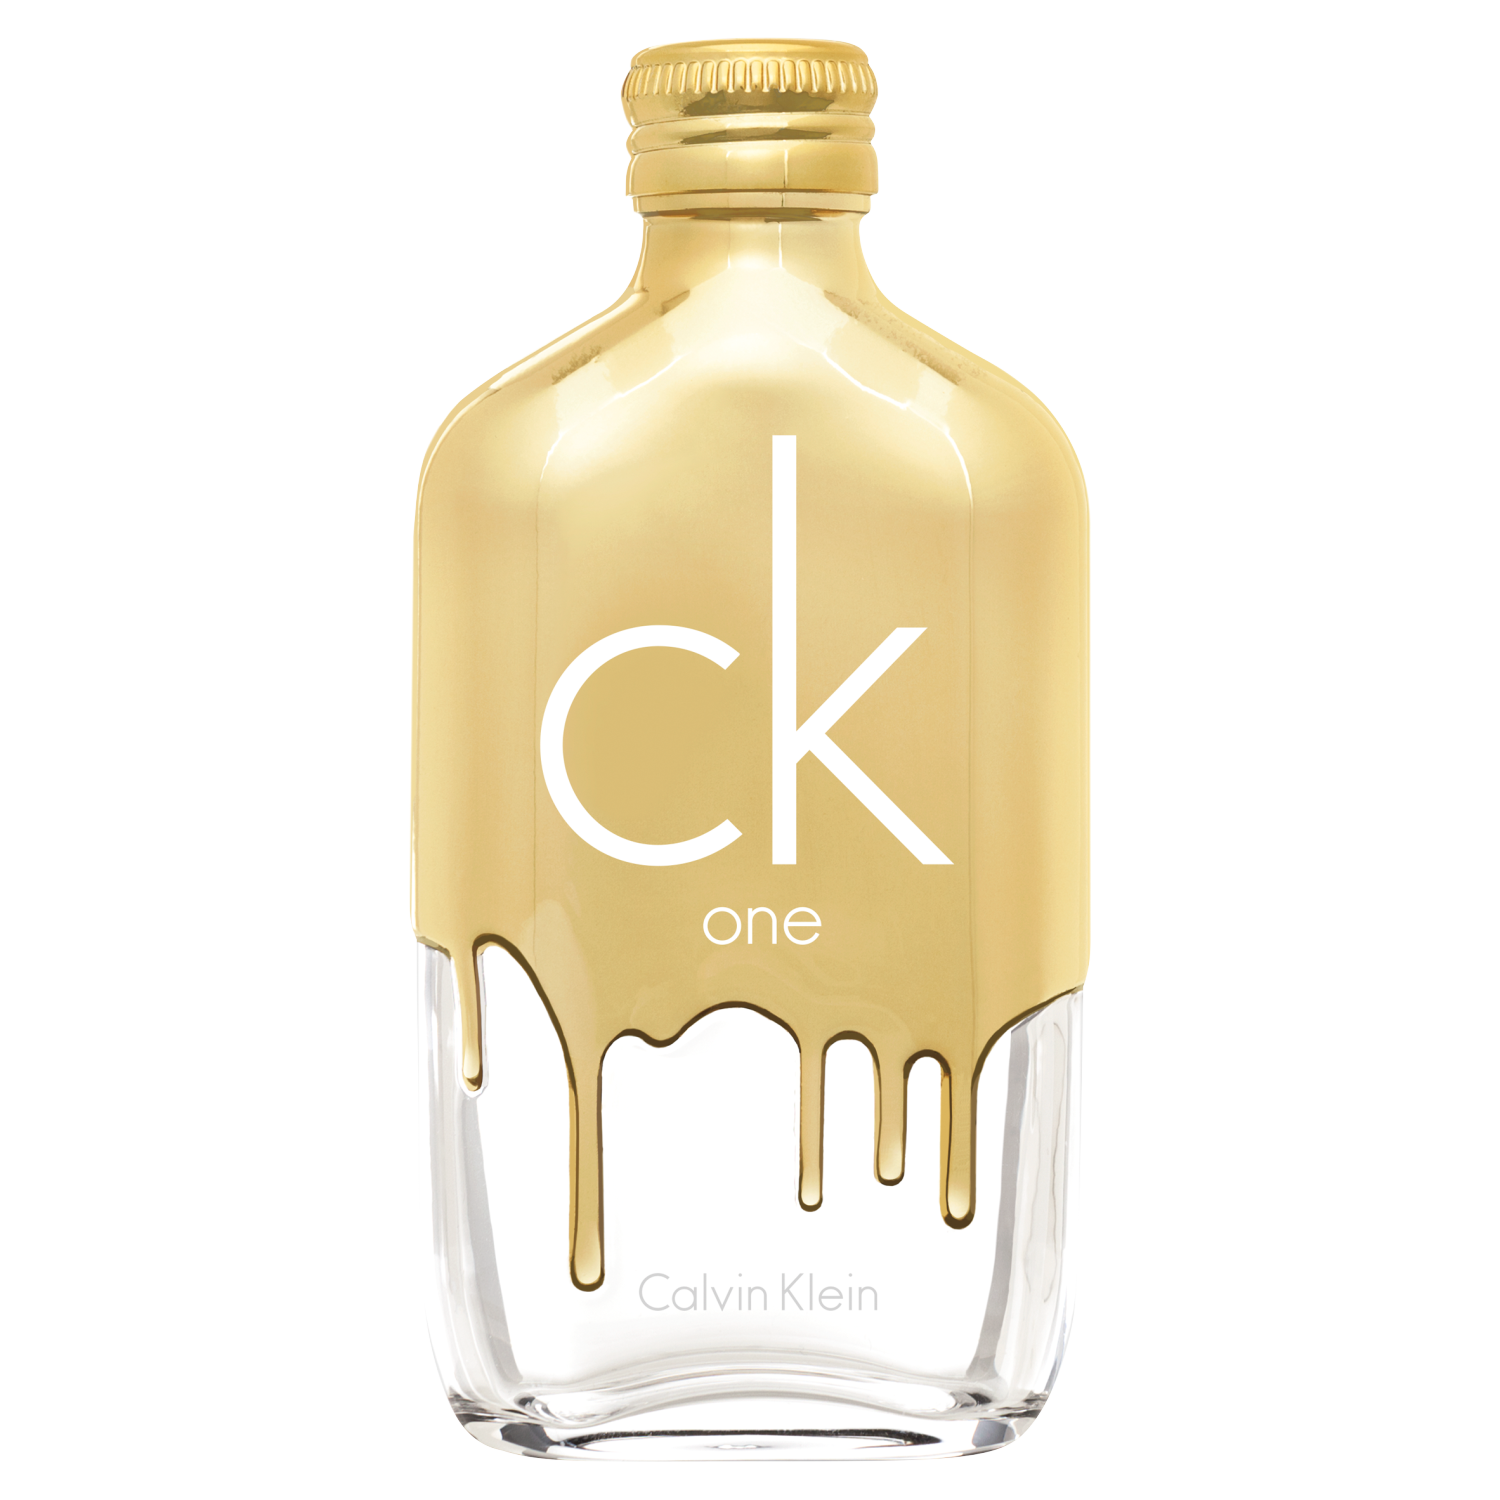 Calvin Klein One Gold woda toaletowa unisex, 100 ml | hebe.pl